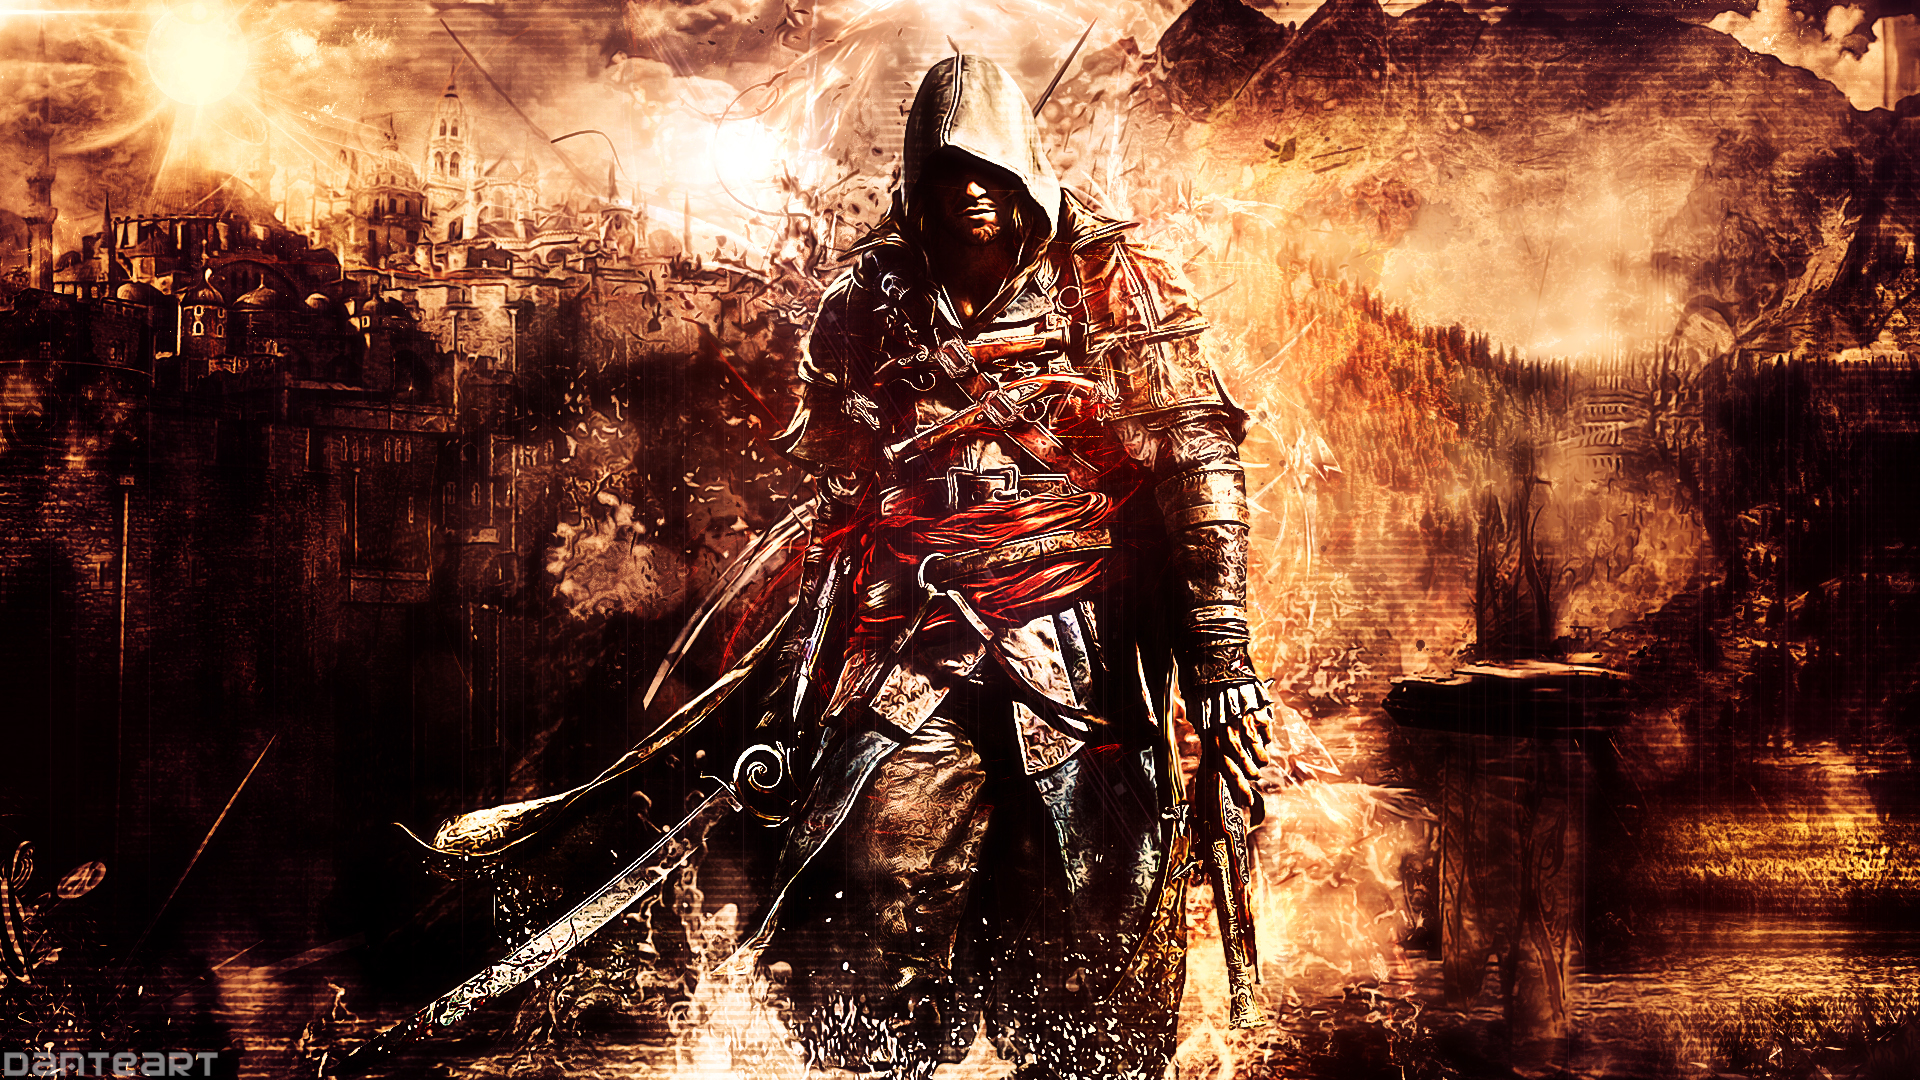 Assassin's Creed 4 Black Flag Wallpaper by DanteArtWallpapers on DeviantArt